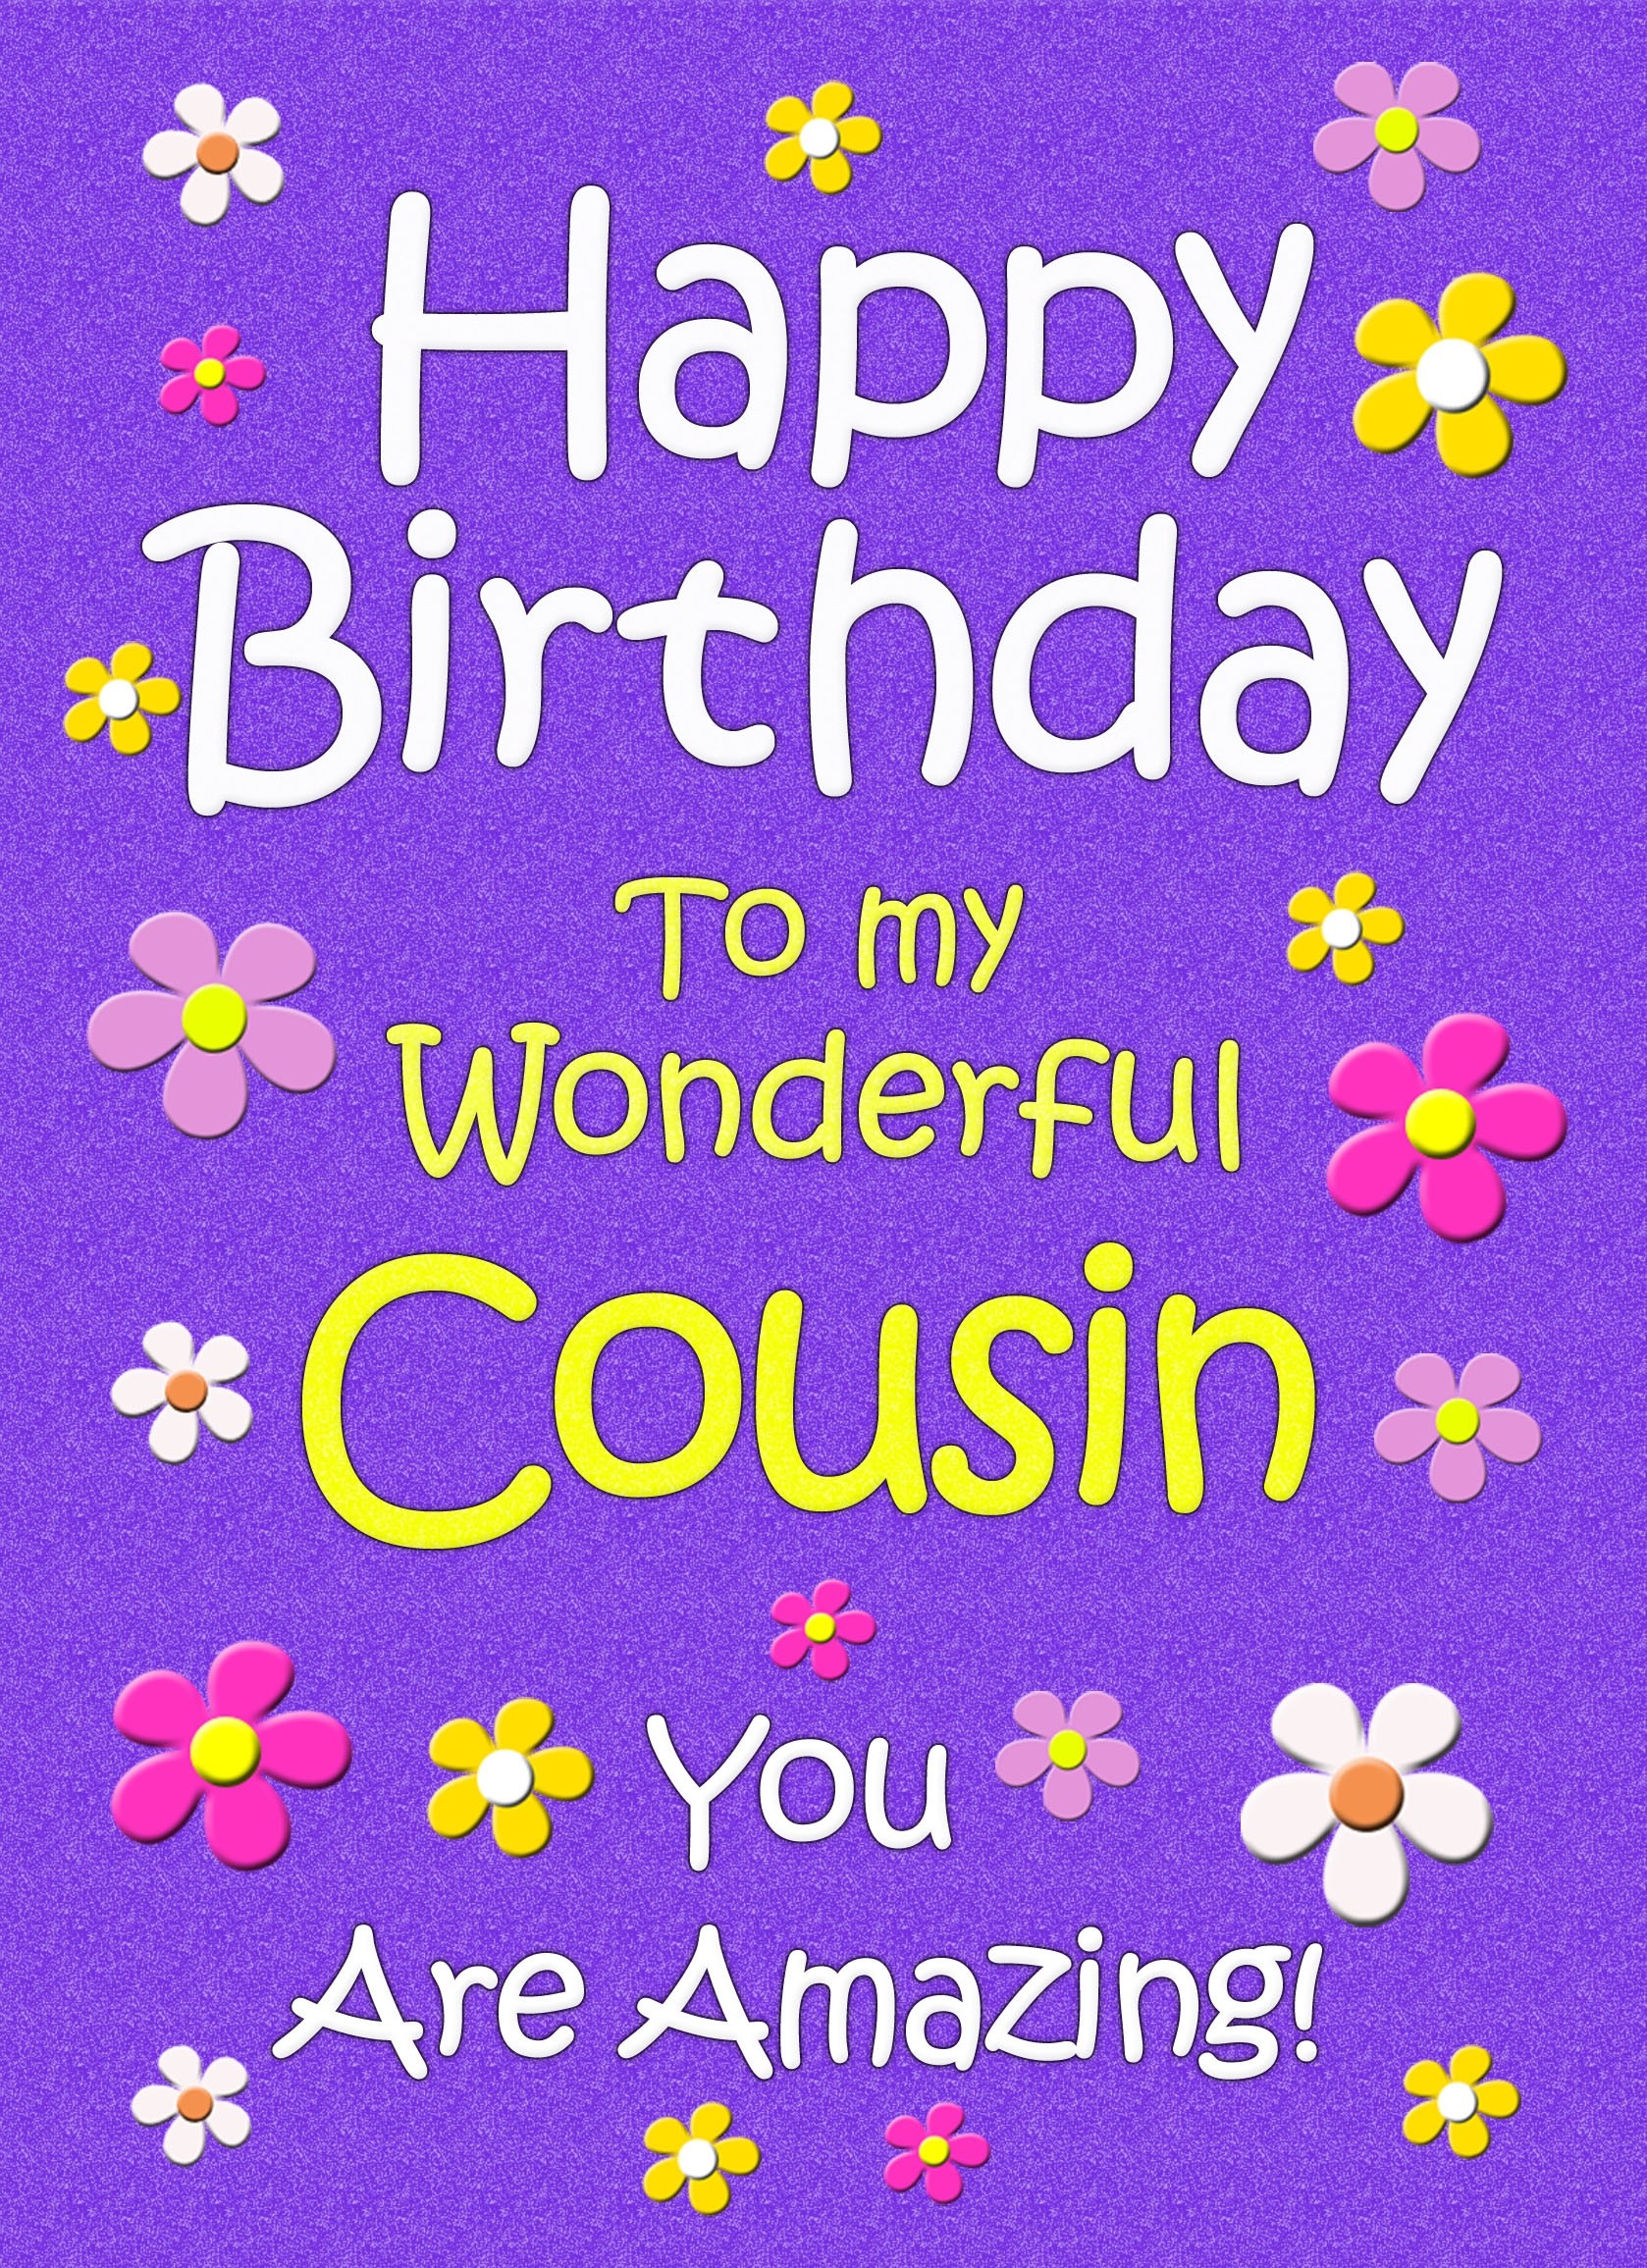 Cousin Birthday Card (Purple)